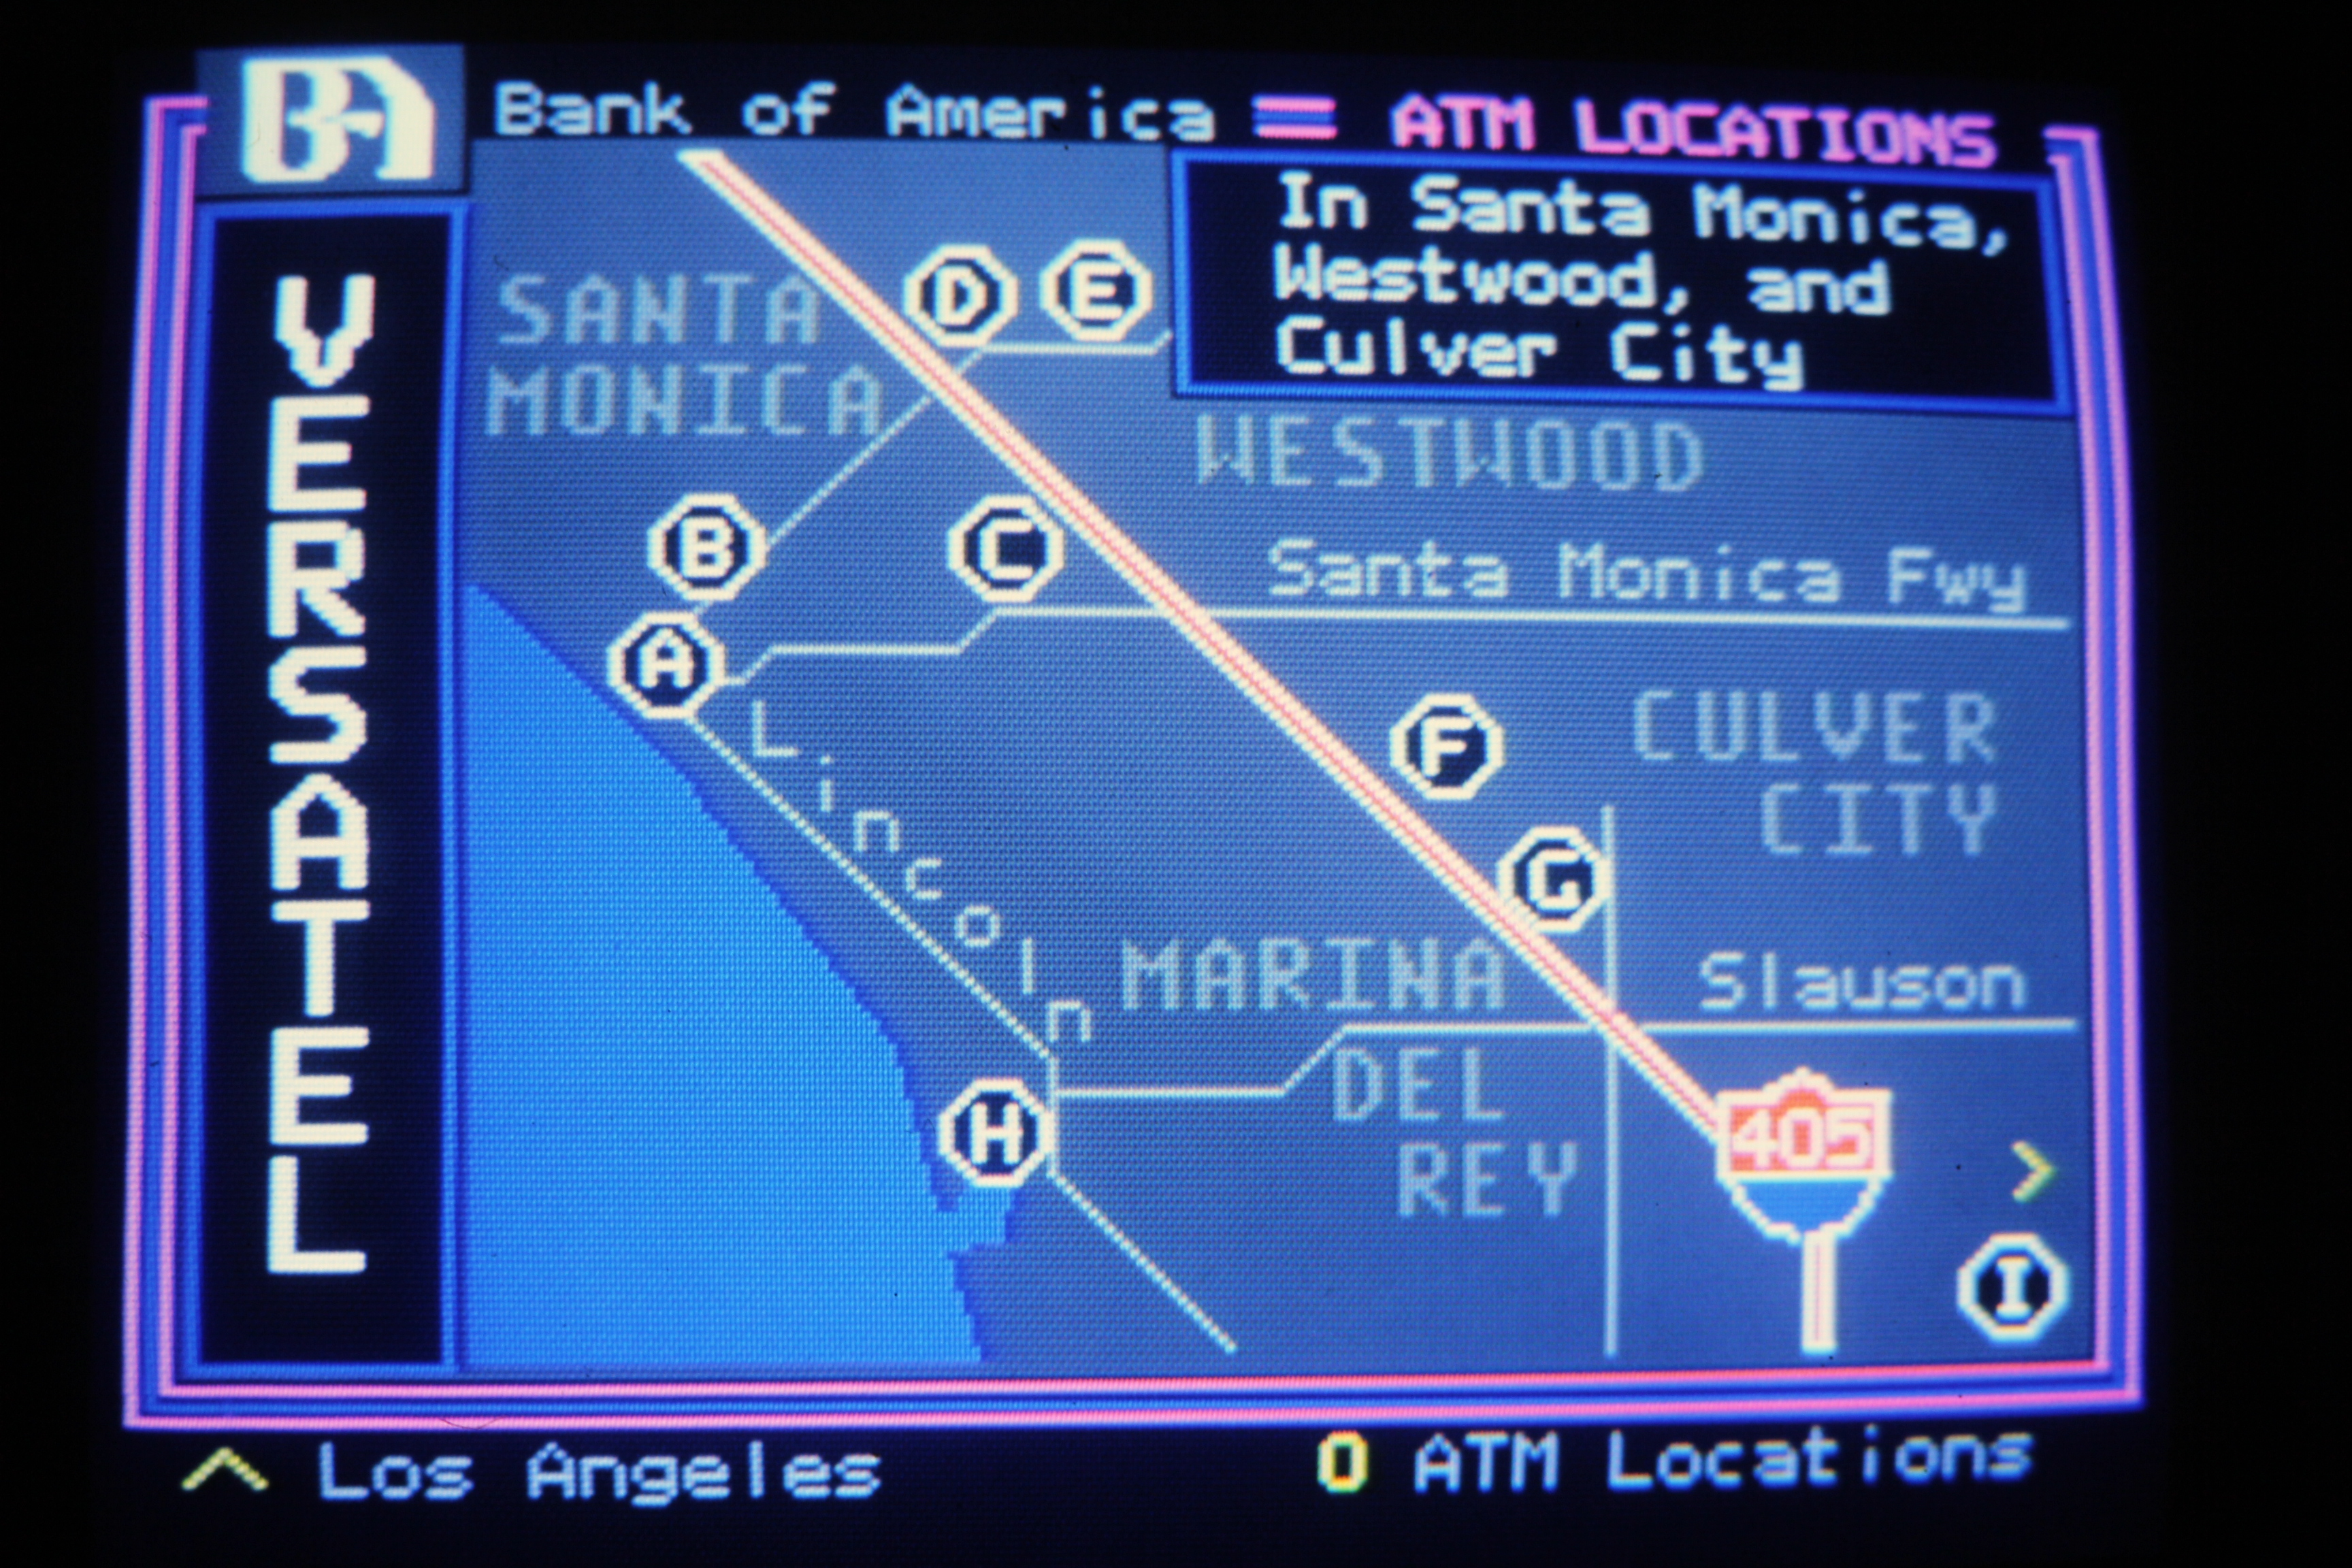 Bank branch location map